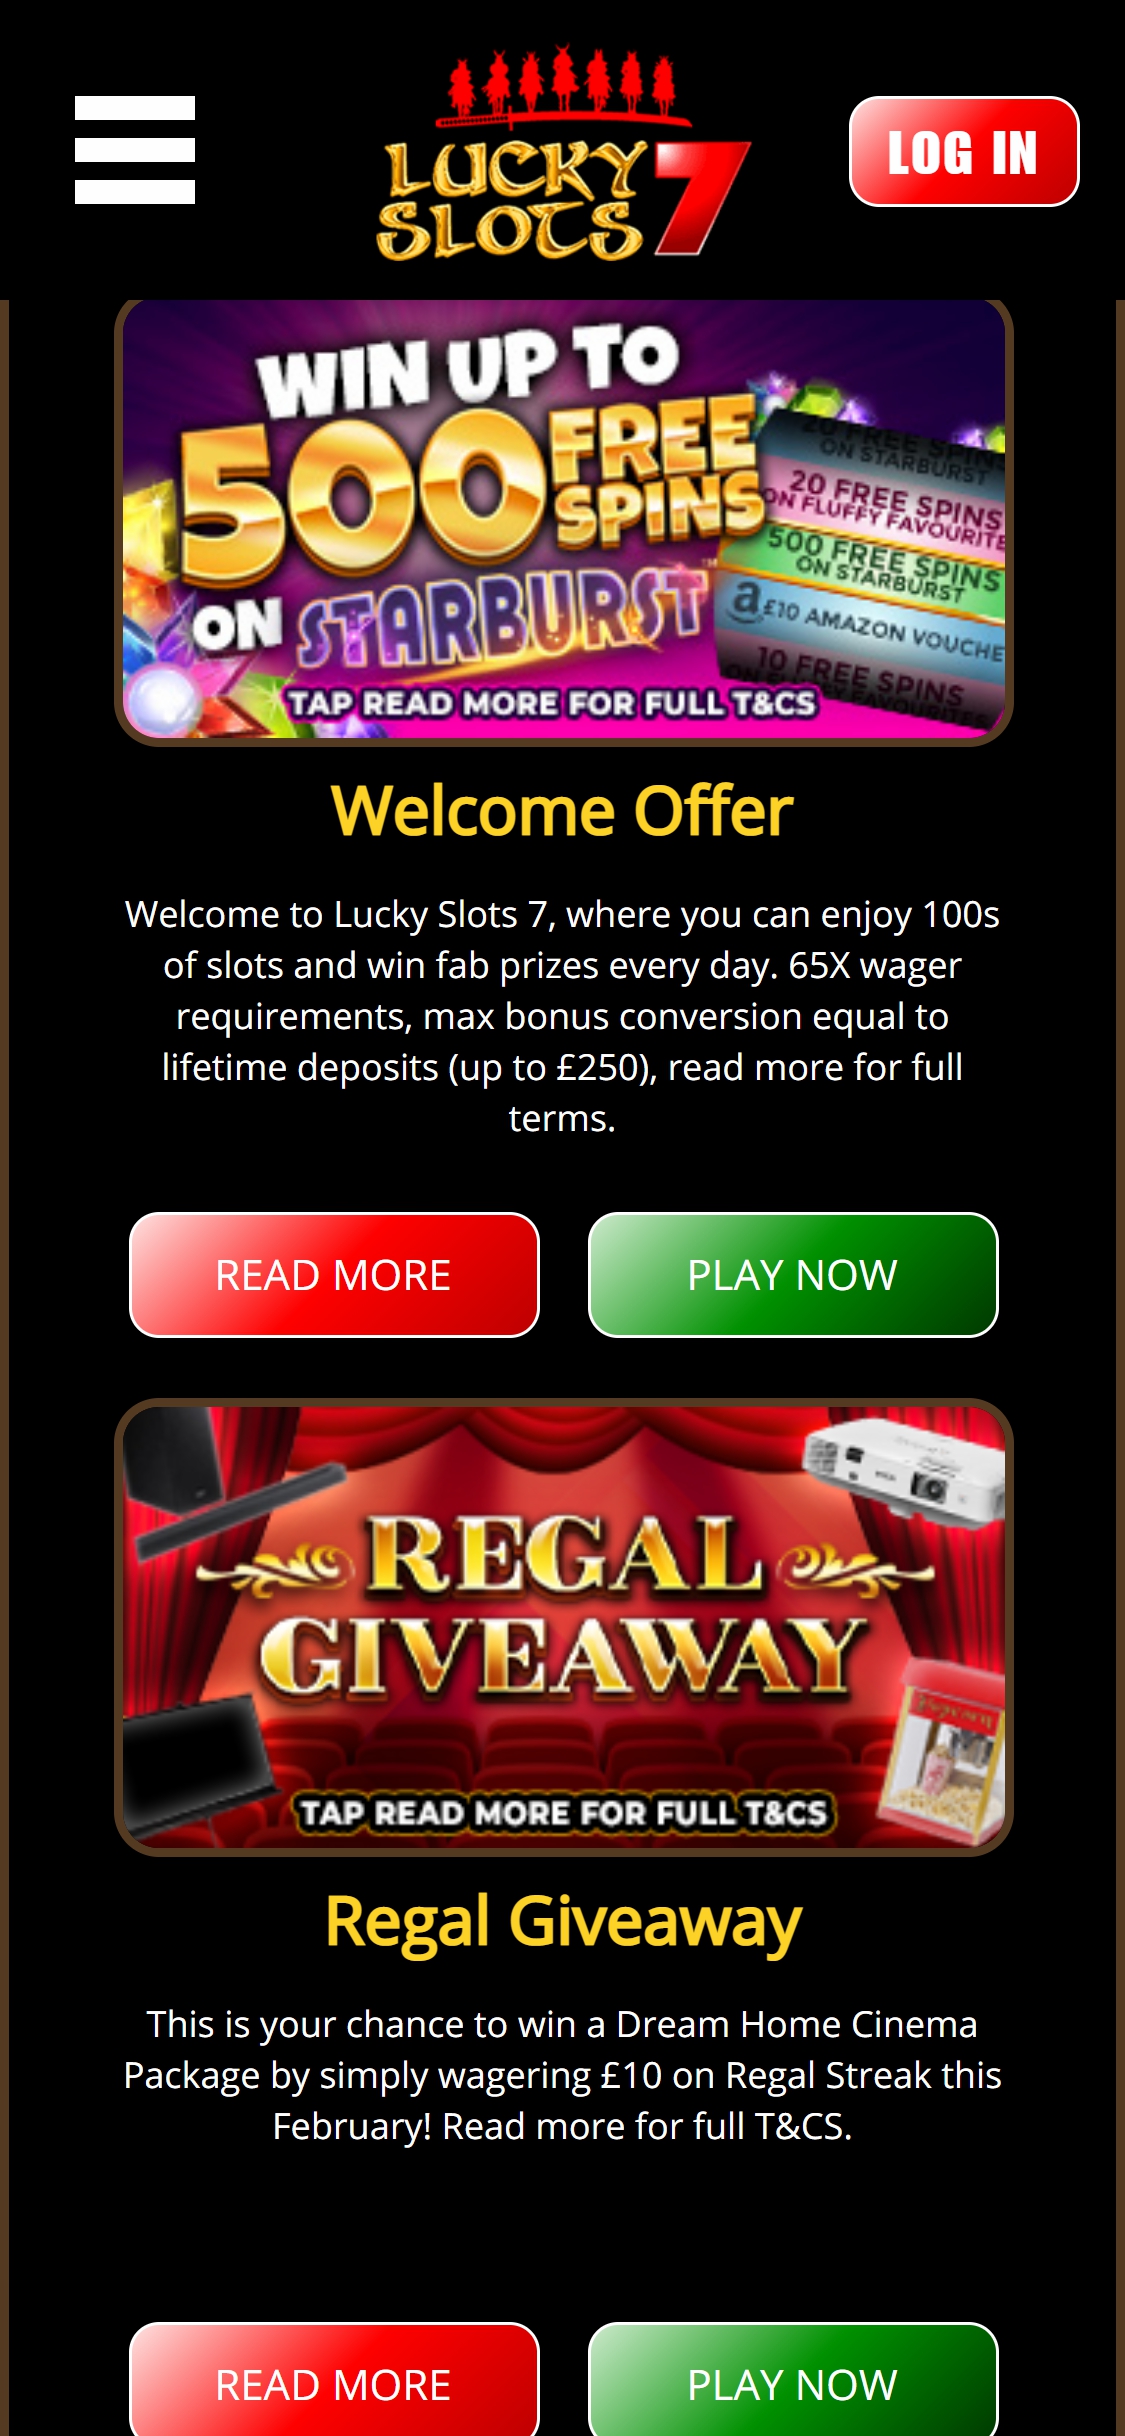 Lucky Slots 7 Casino Mobile No Deposit Bonus Review